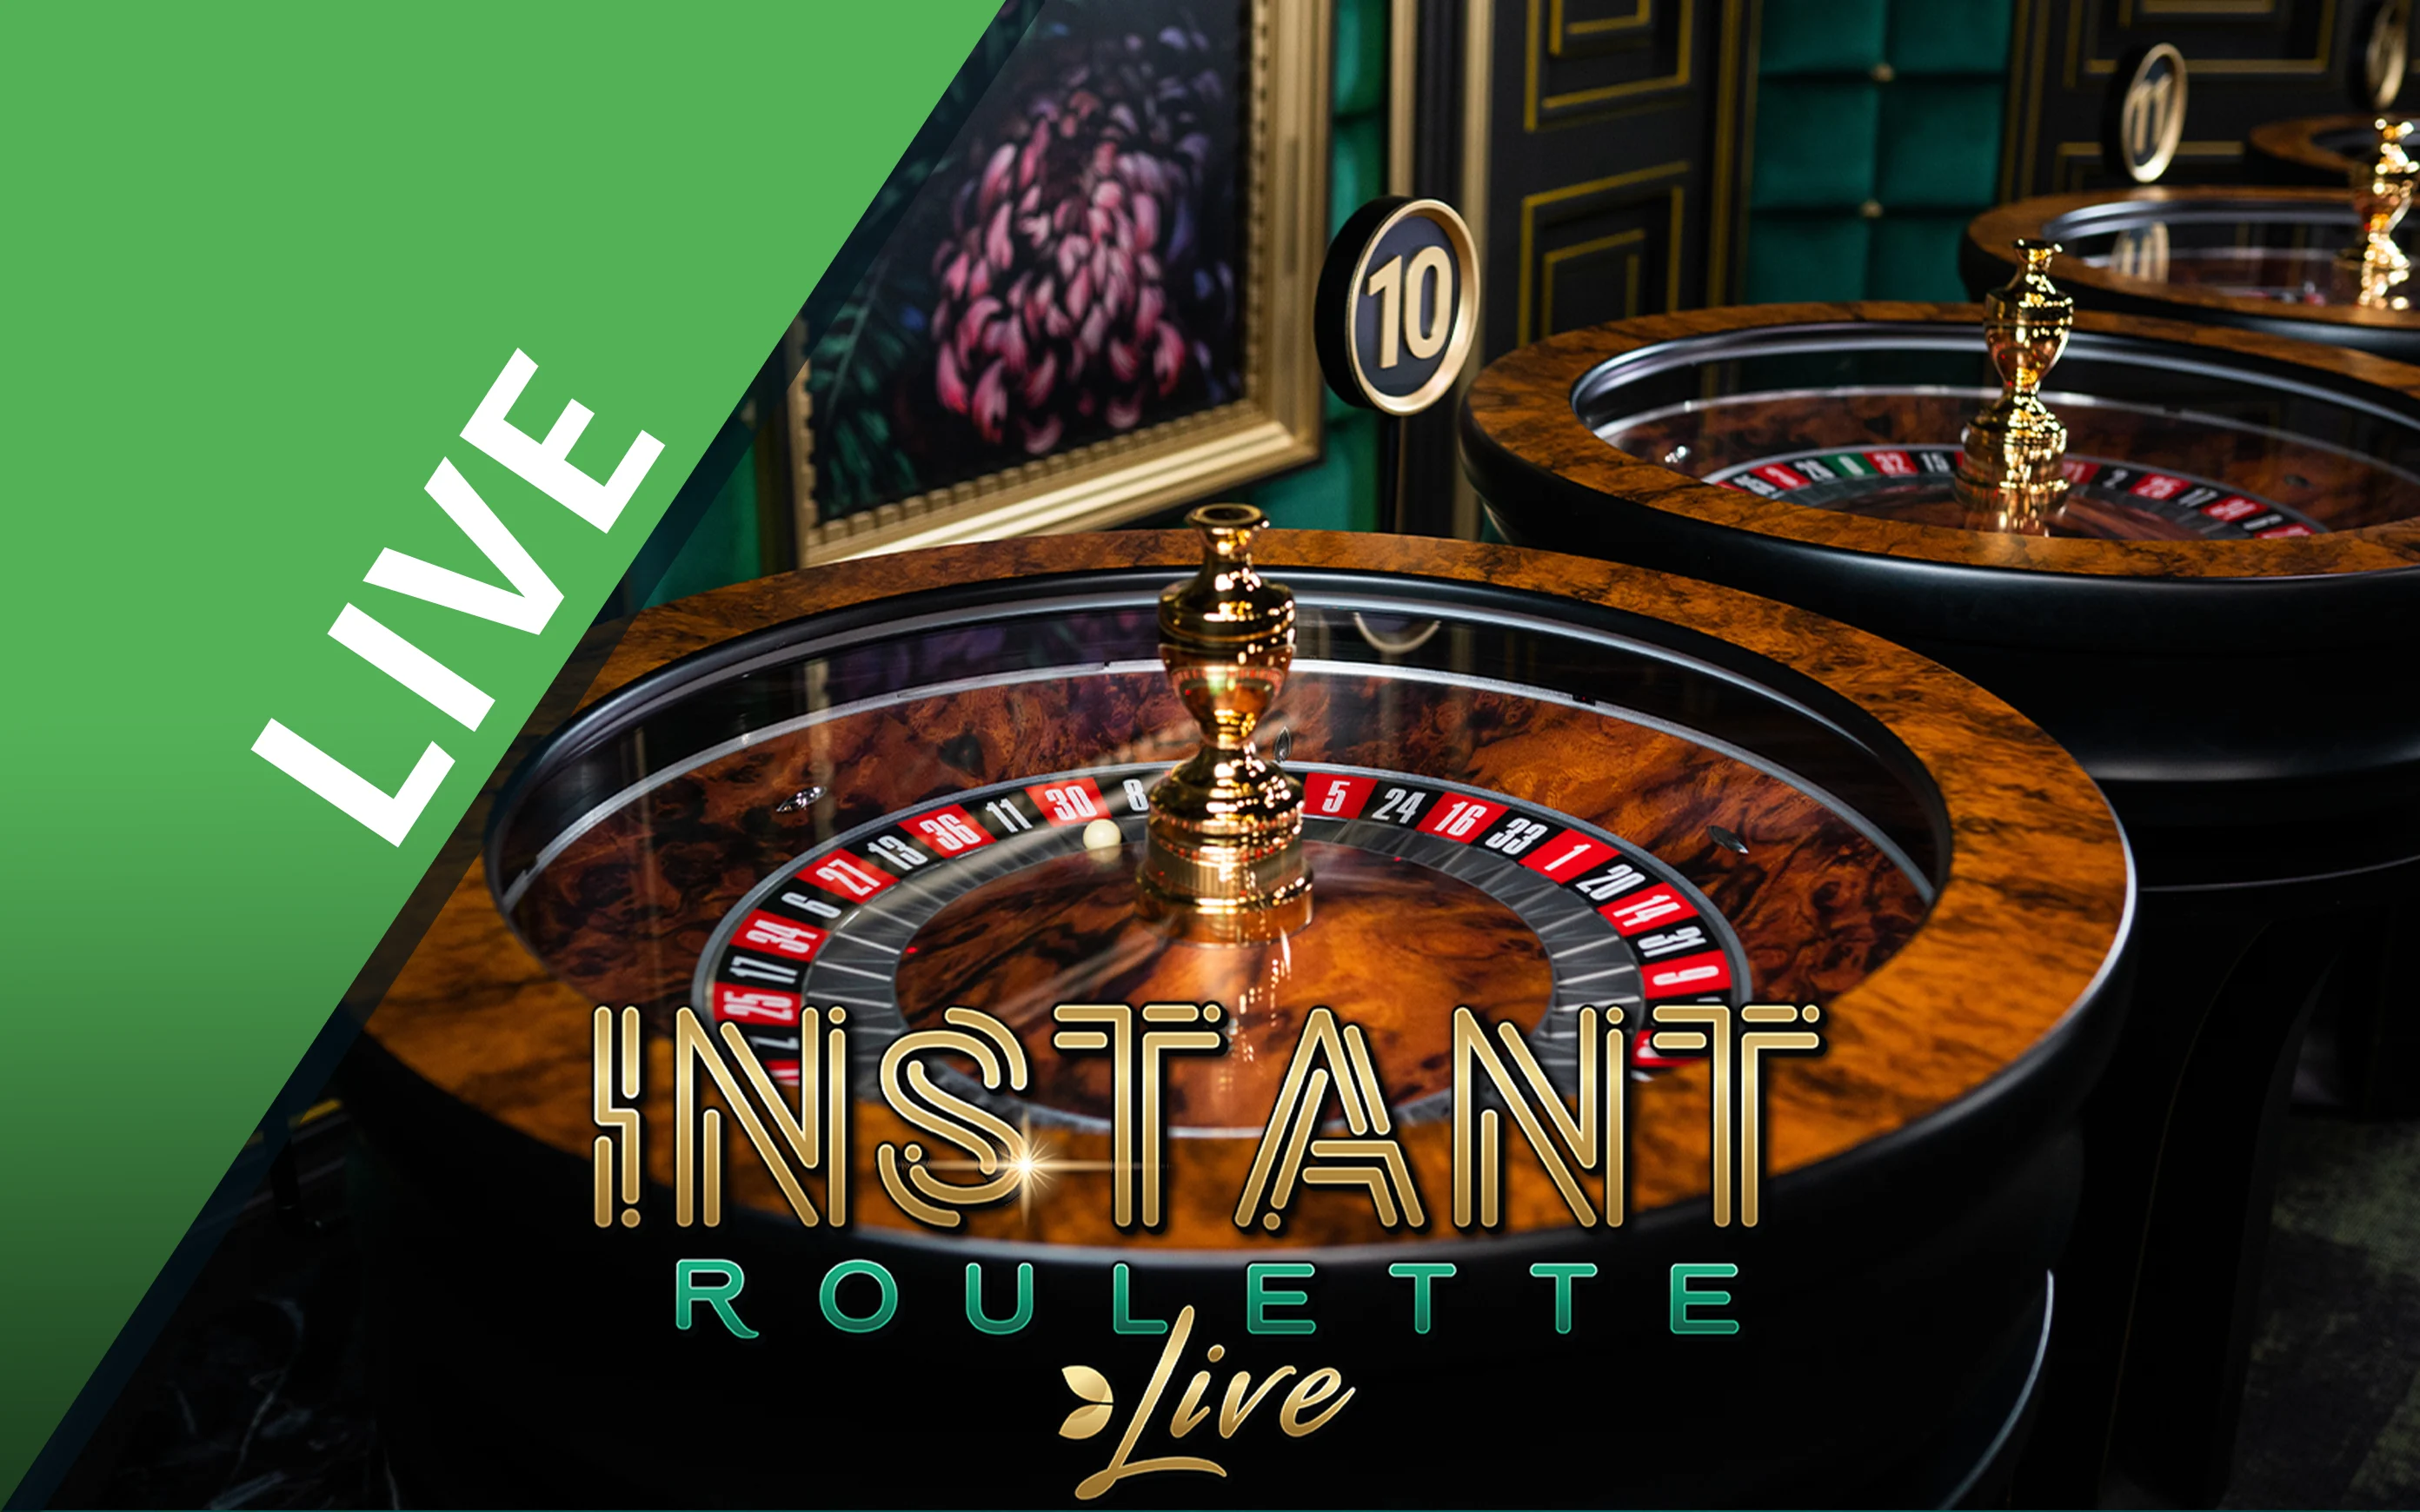 Juega a Instant Roulette en el casino en línea de Starcasino.be